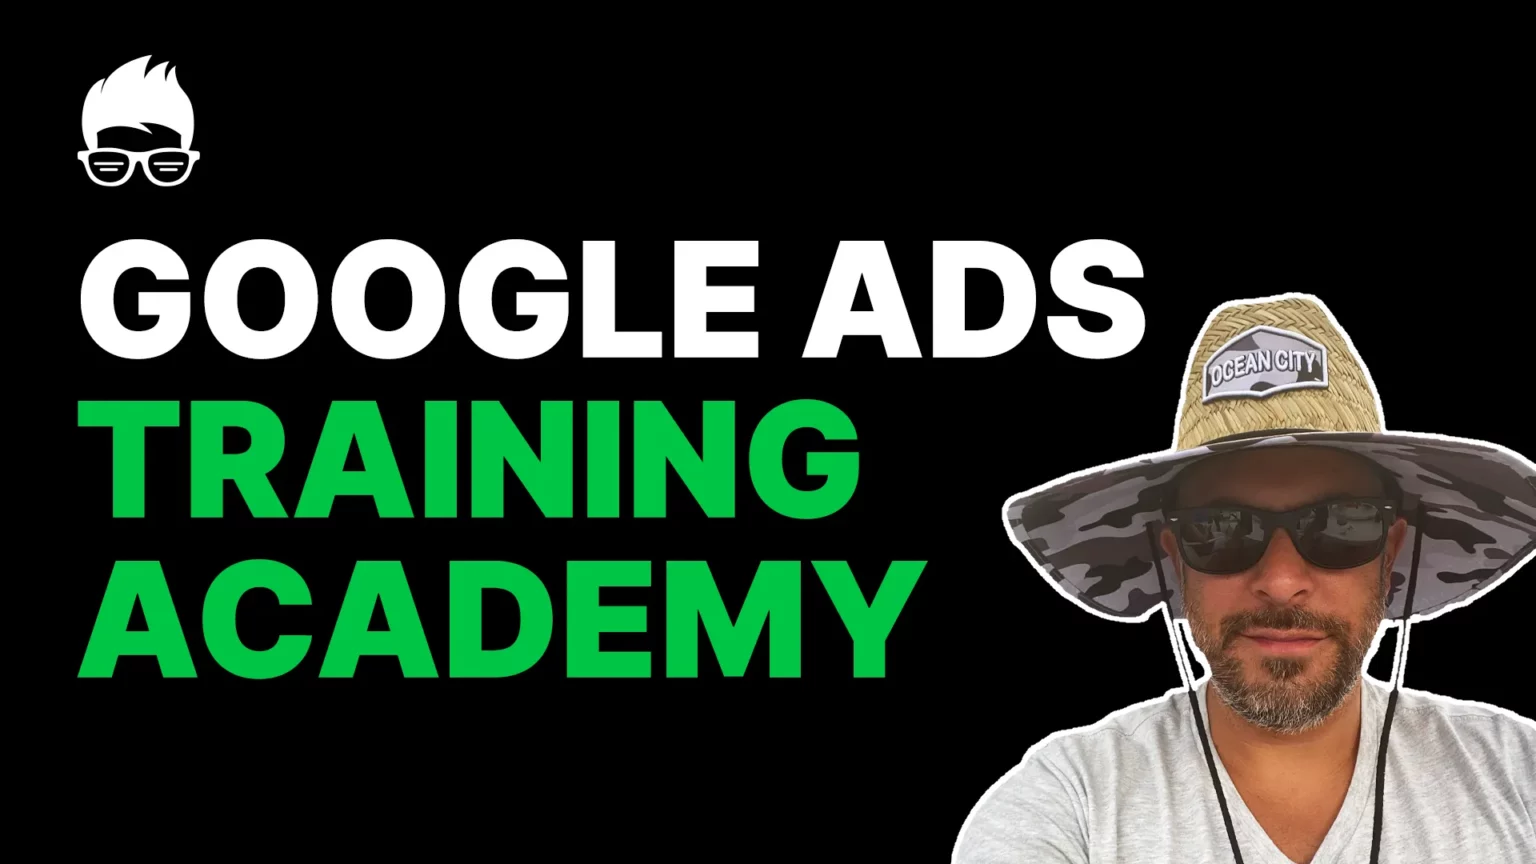 Google Ads Training Academy Video Intro